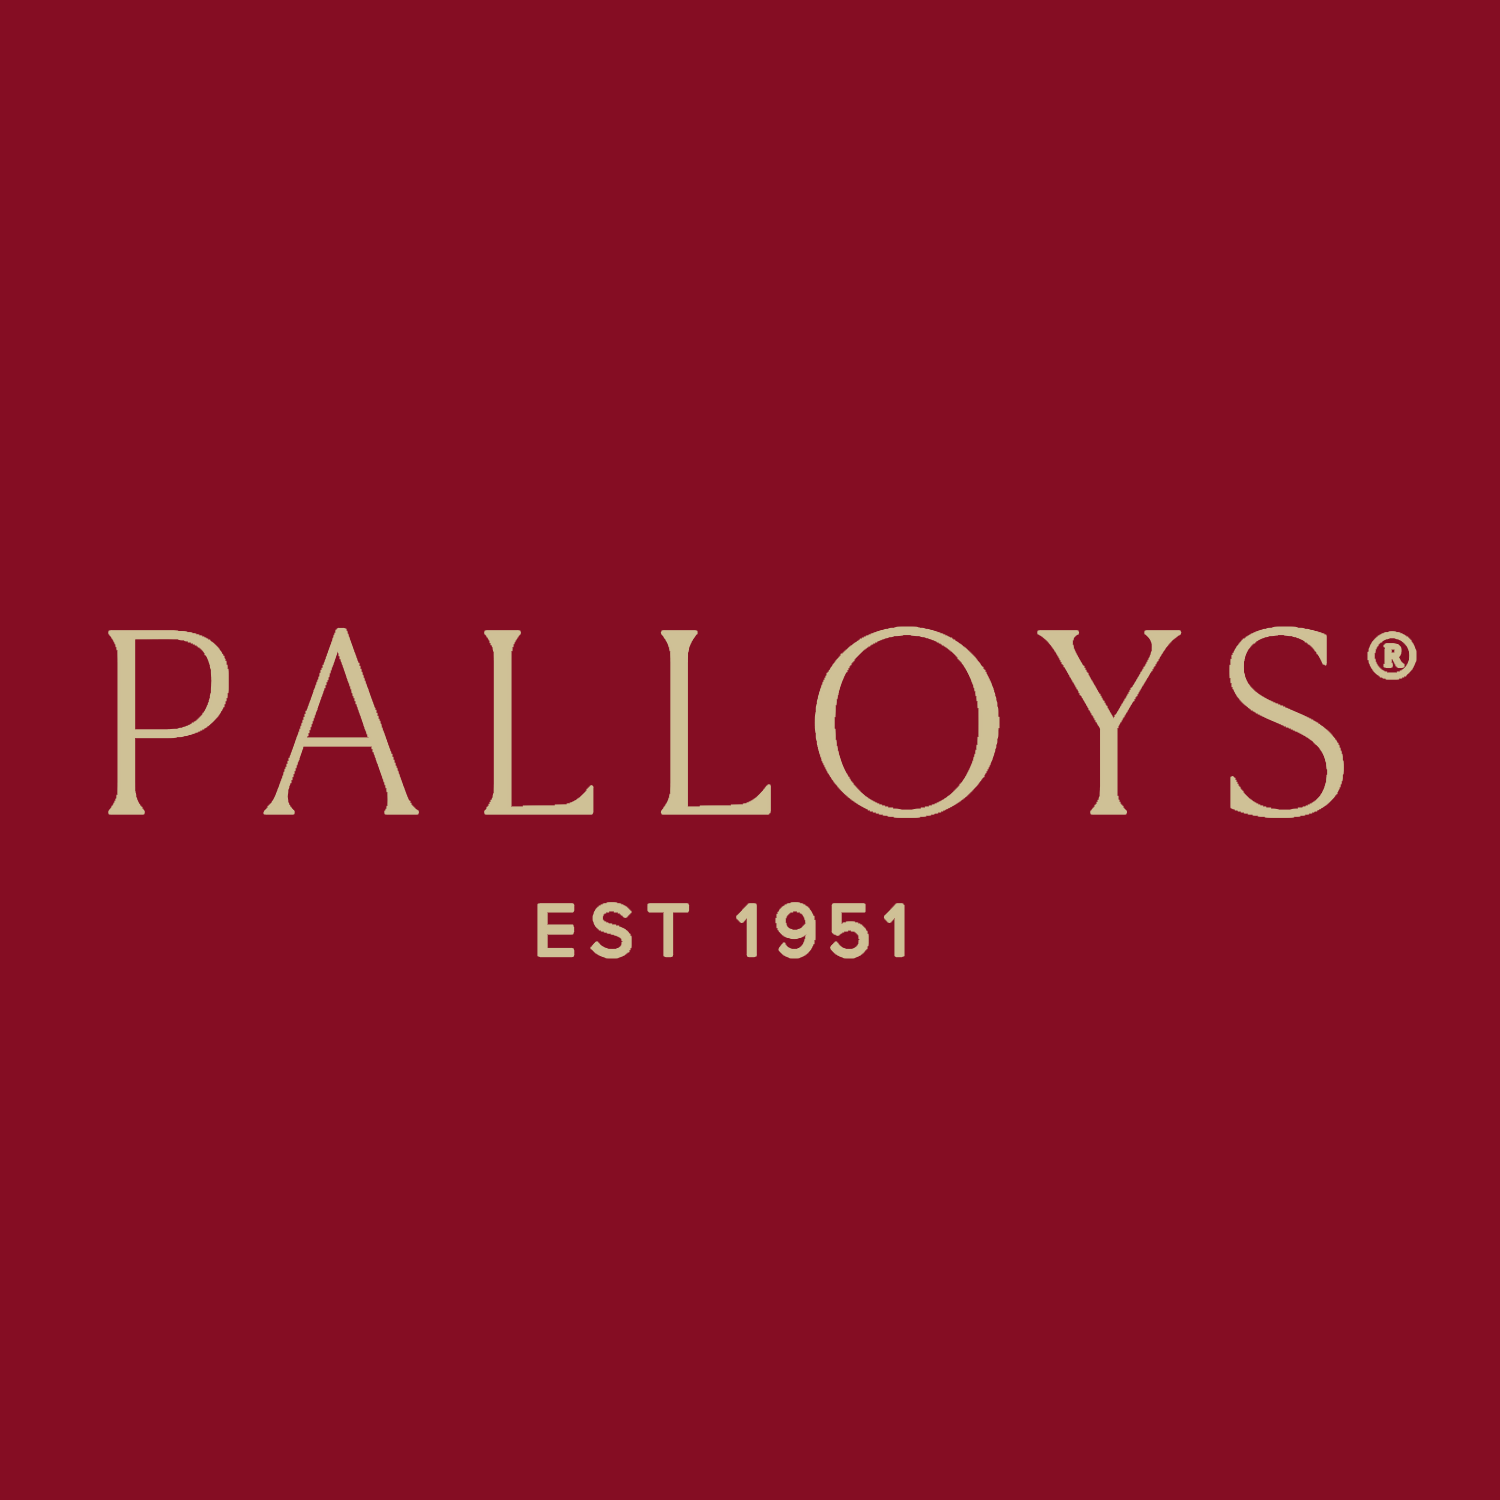 Business logo of Palloys